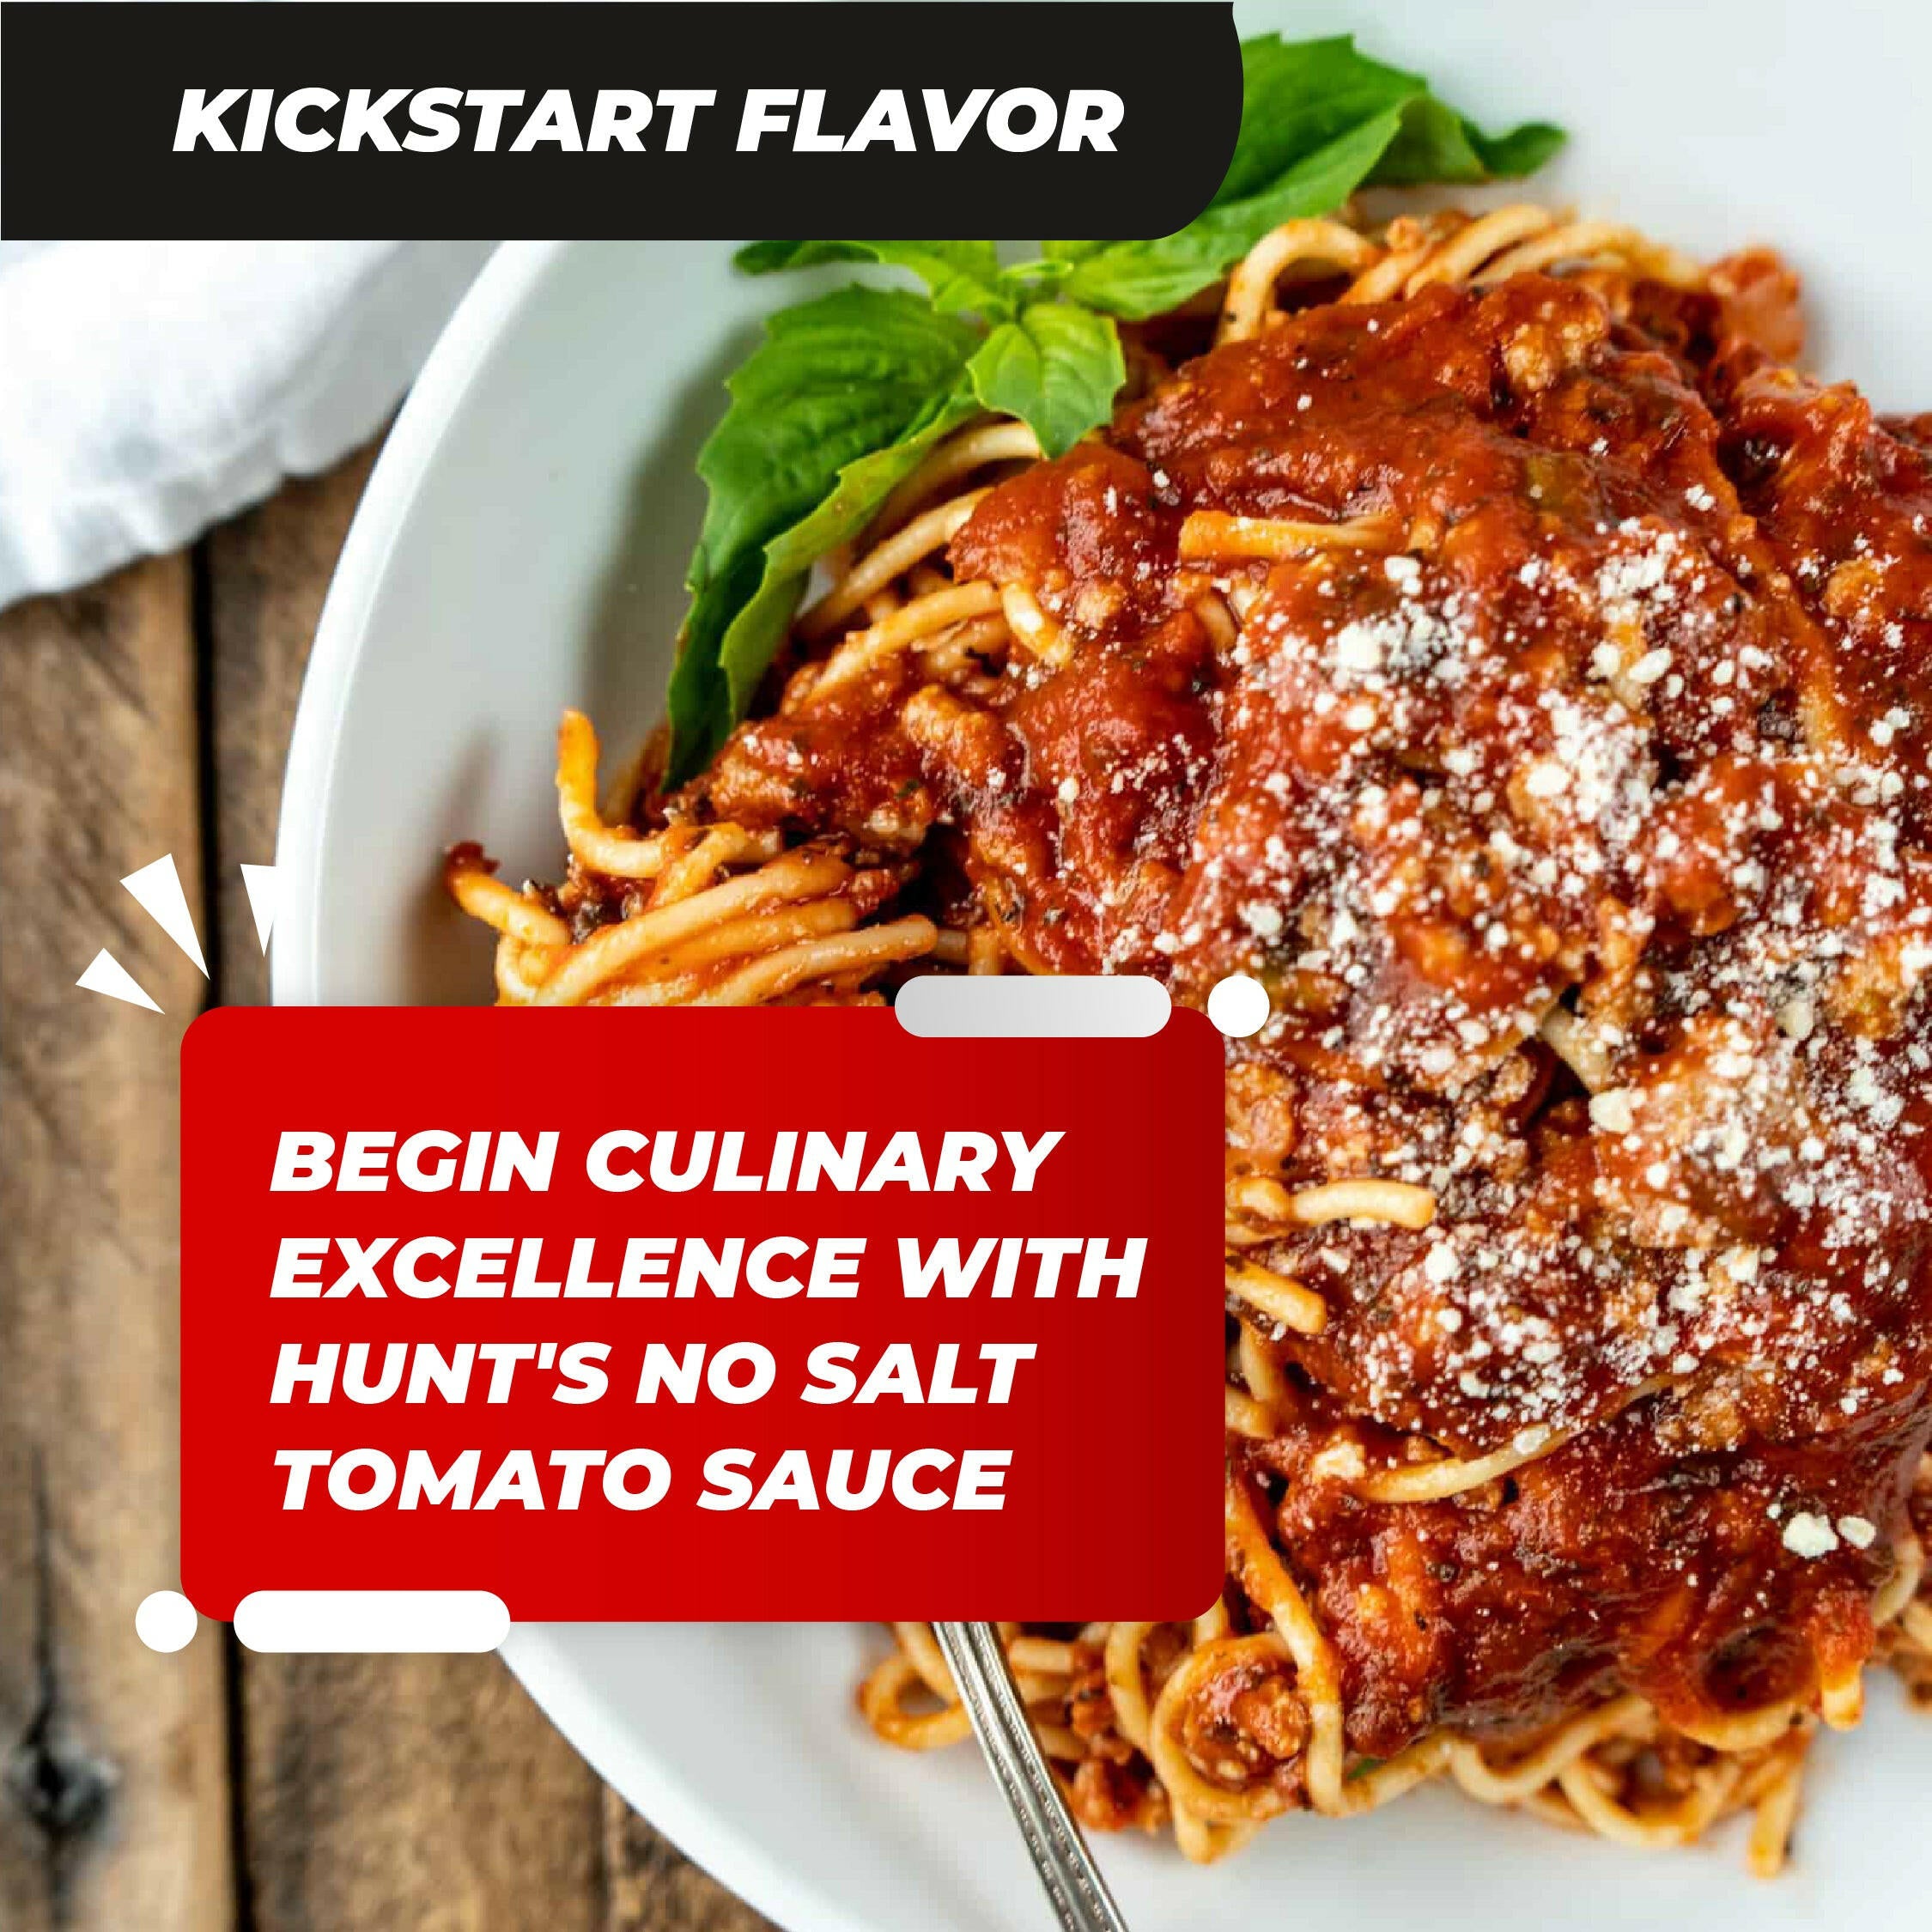 15 Tomato Sauce No Salt 8 oz Cans + 15 Catsa Essentials Stirrers